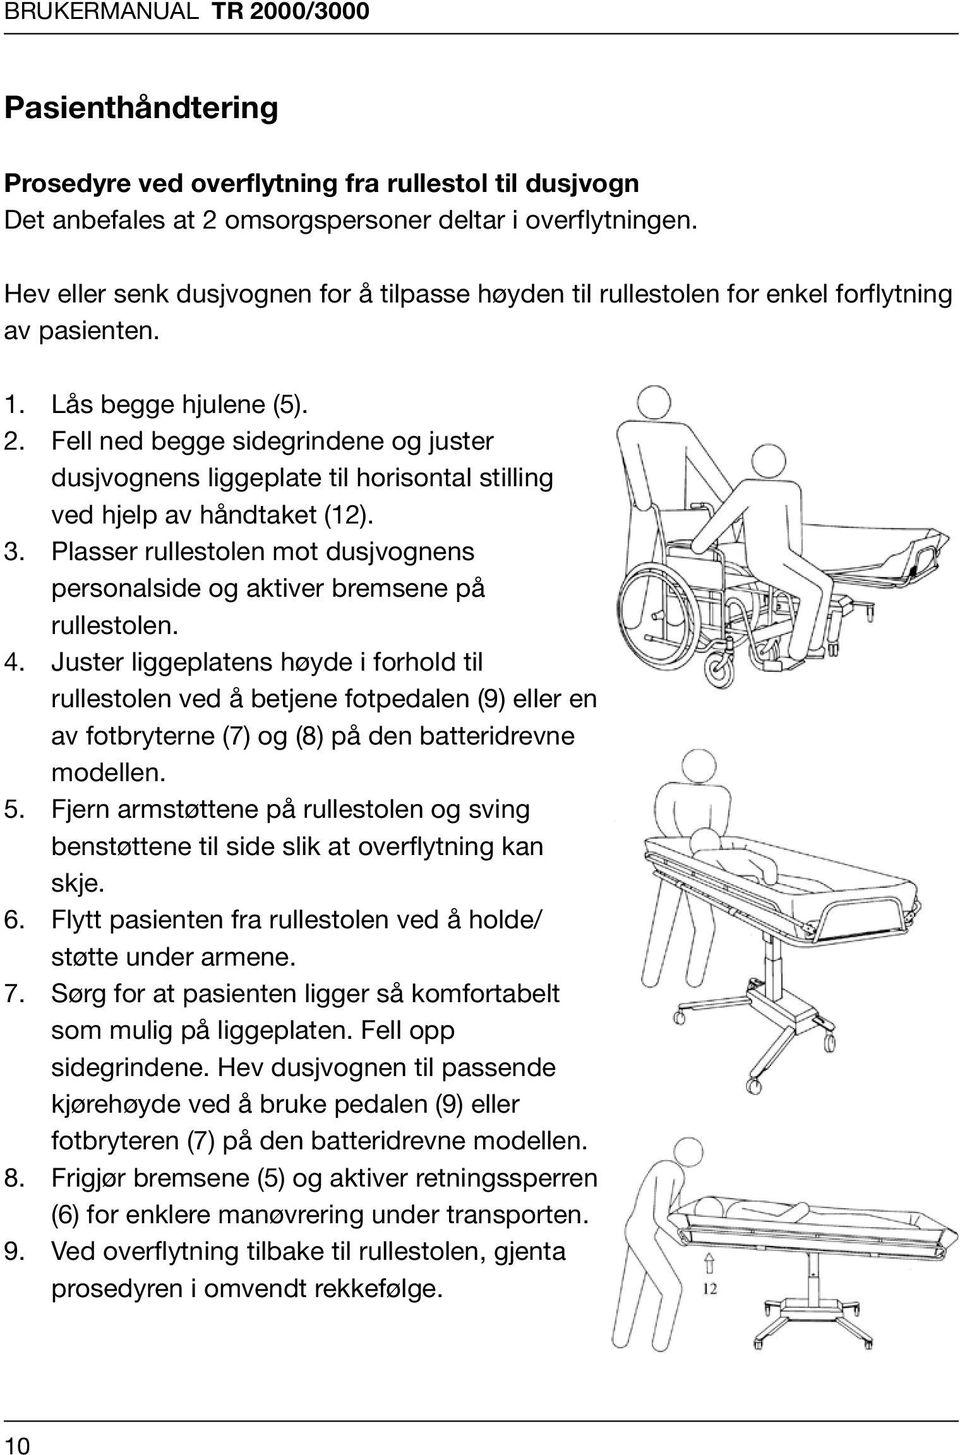 håndtering Prosedyre ved overflytning fra rullestol til dusjvogn Prosedyre Det anbefales ved at overflytning 2 omsorgs-personer fra rullestol deltar til dusjvogn i overflytningen.